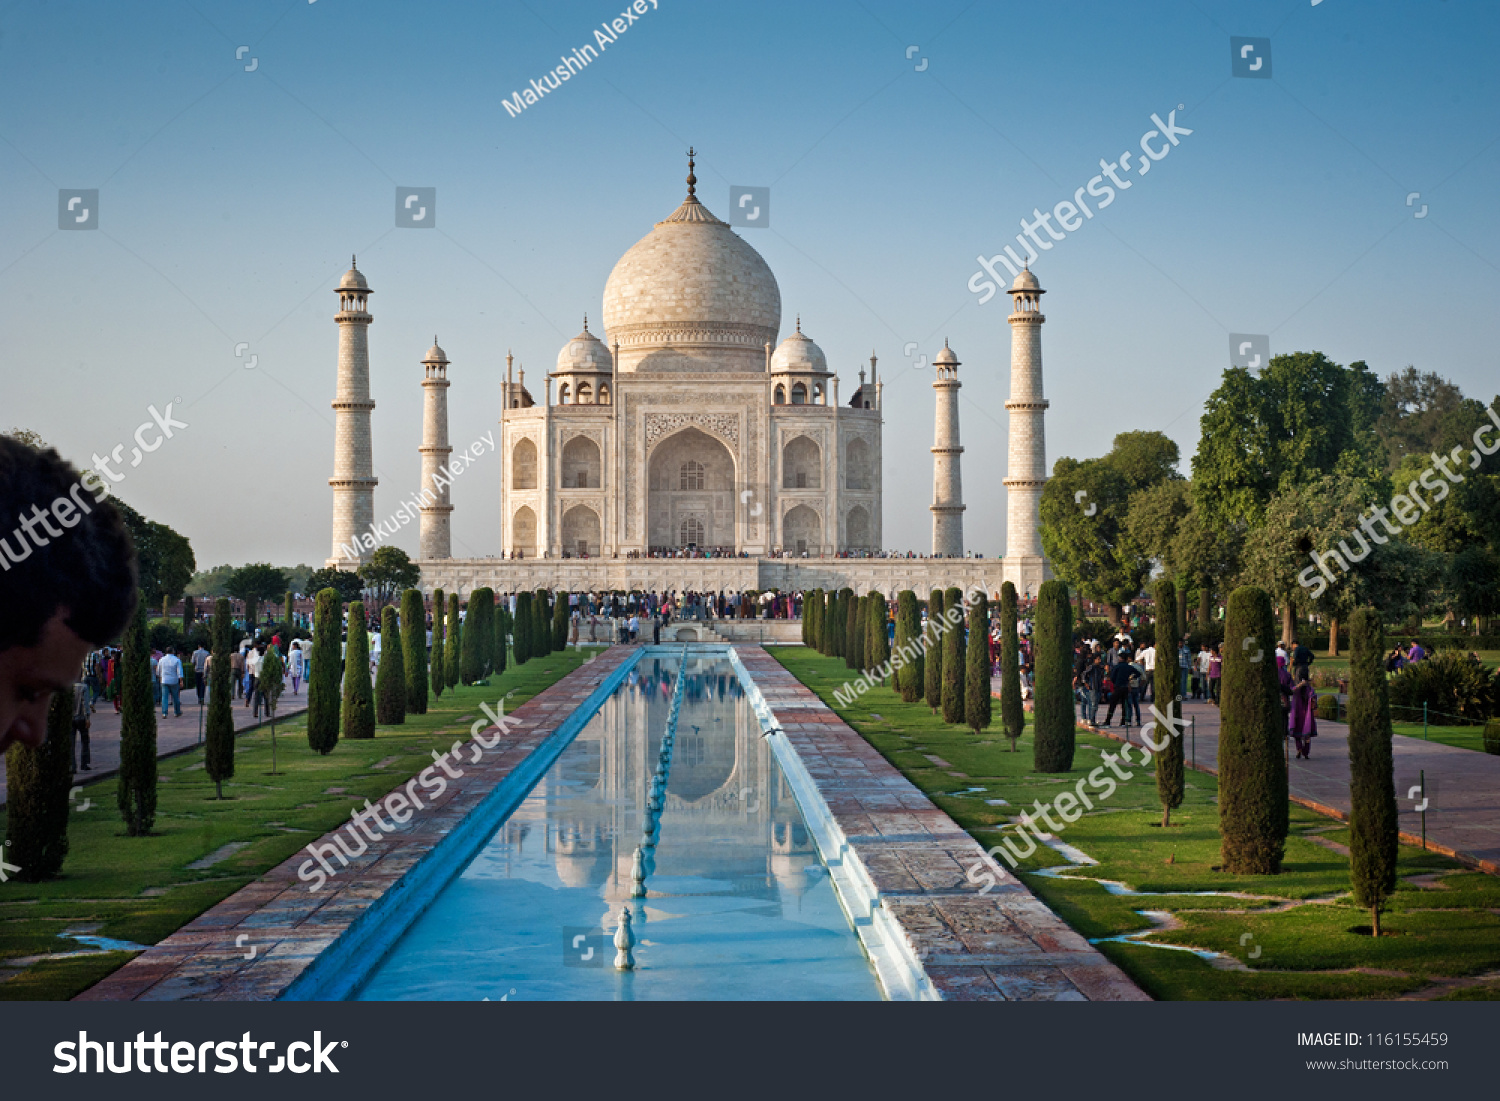  One of the seven wonders of the world - Taj Mahal mausoleum in evening light. Arga, India. #116155459